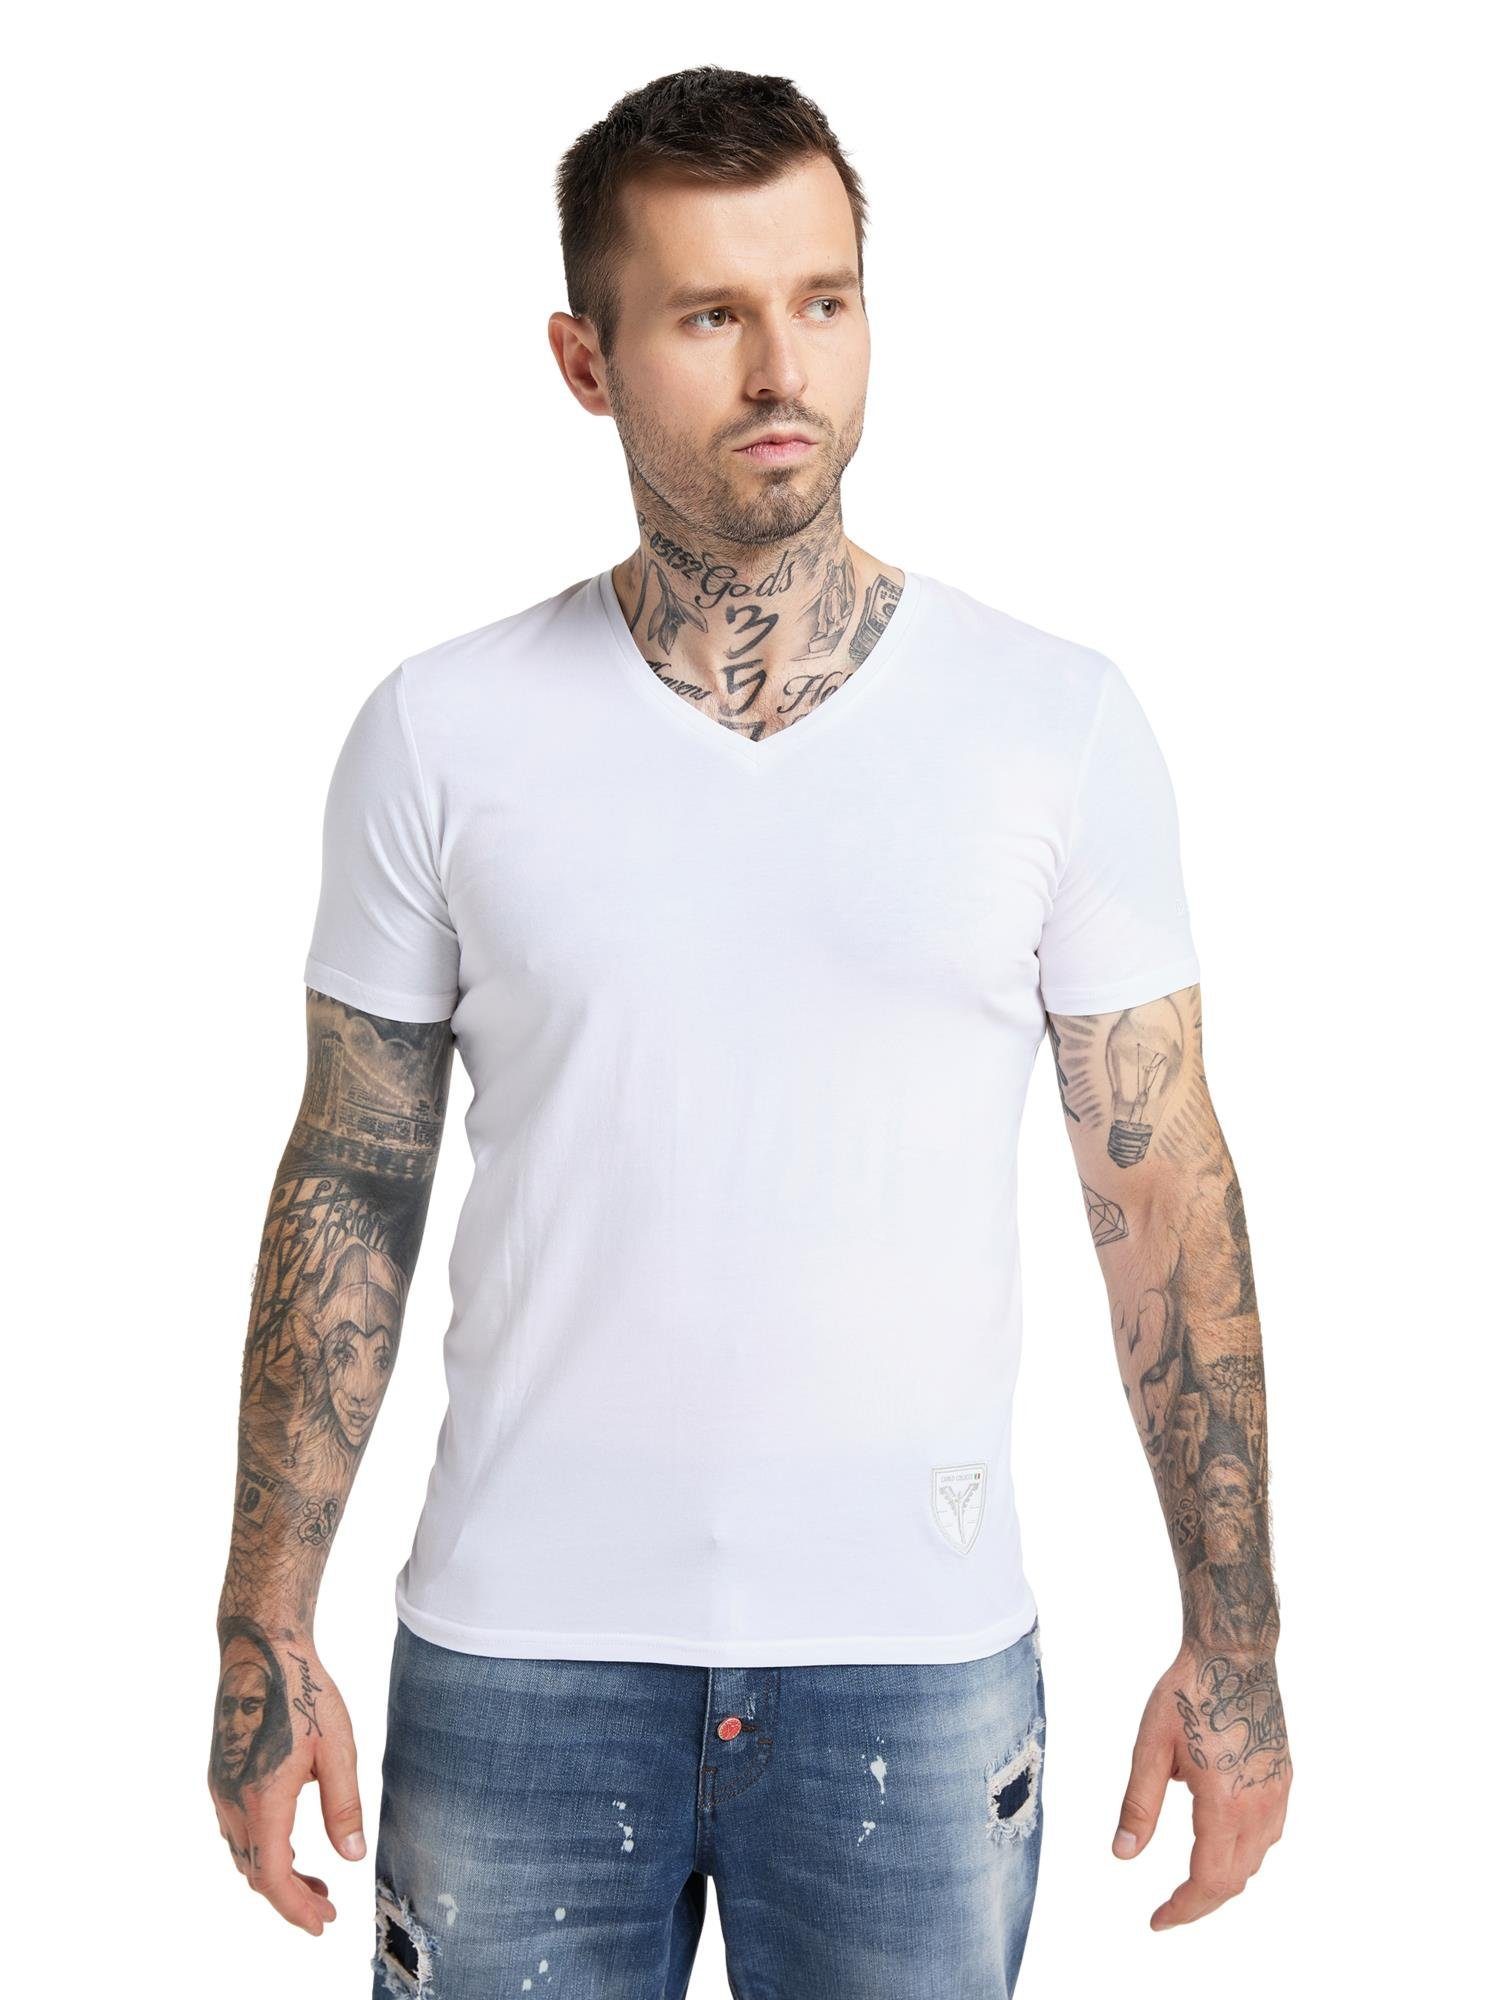 CARLO COLUCCI Cavallari Weiß T-Shirt